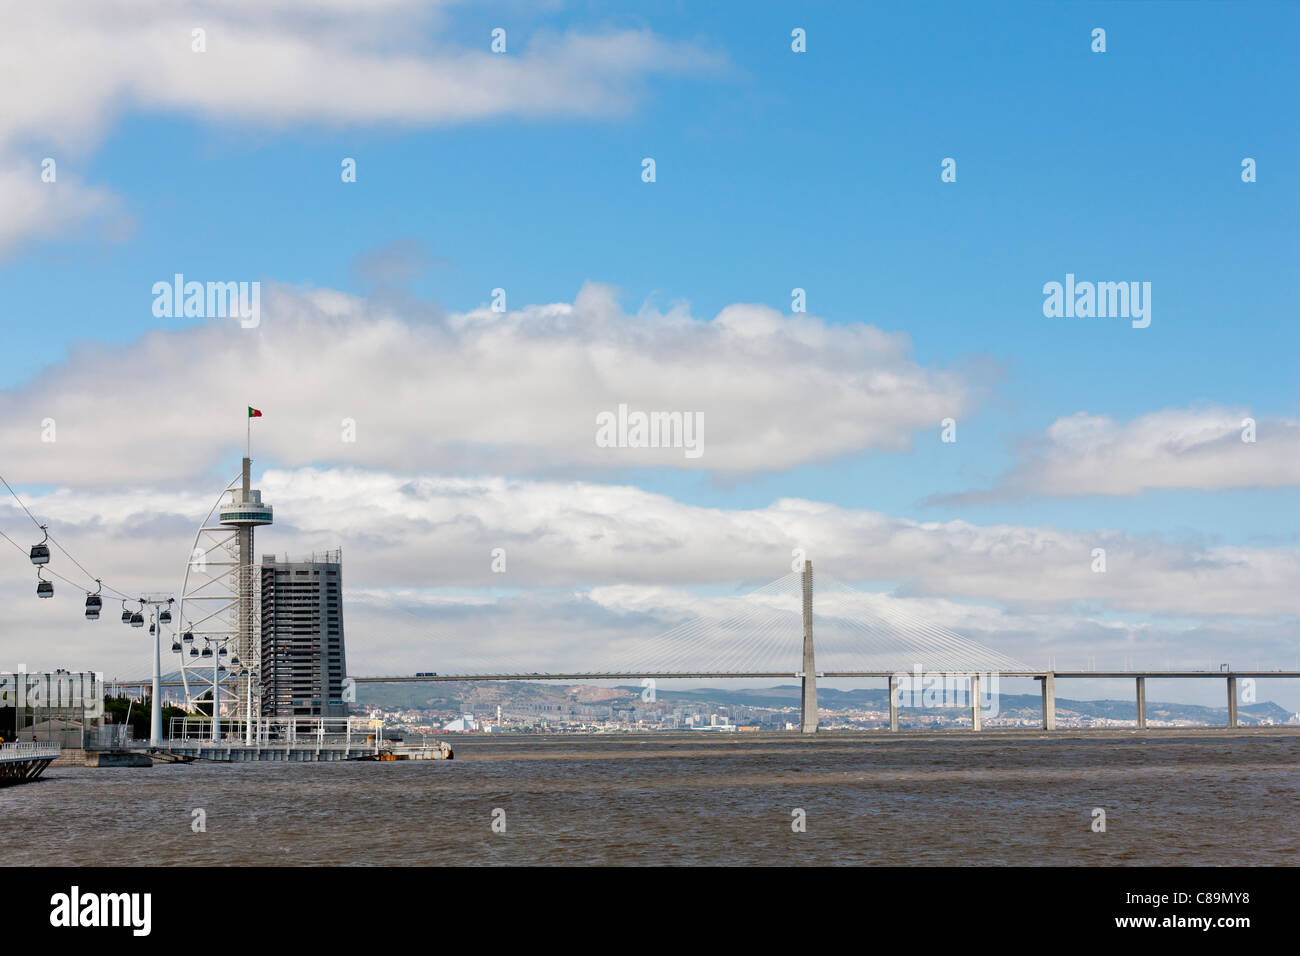 Europa, Portugal, Lissabon, Parque Das Nacoes, Ansicht von Vasco da Gama Turm und Vasco da Gama Brücke Stockfoto